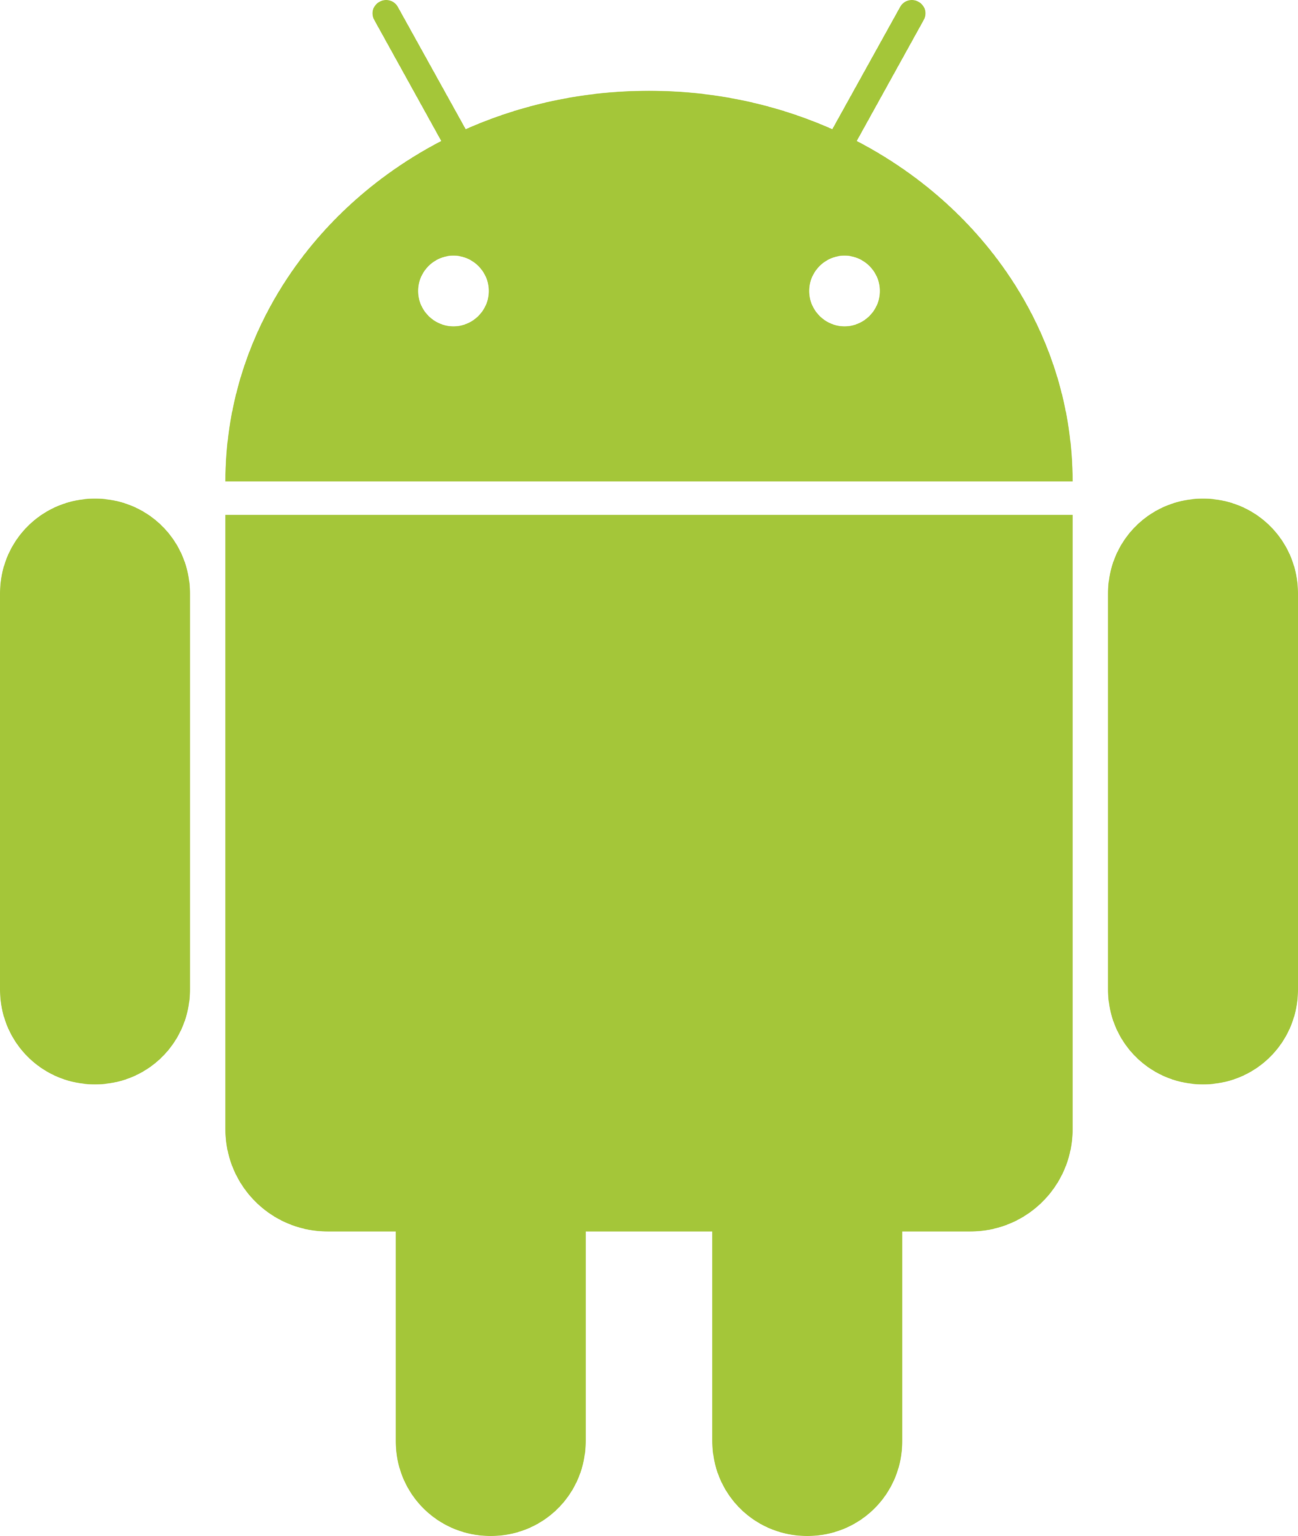 Android Logo PNG Cutout